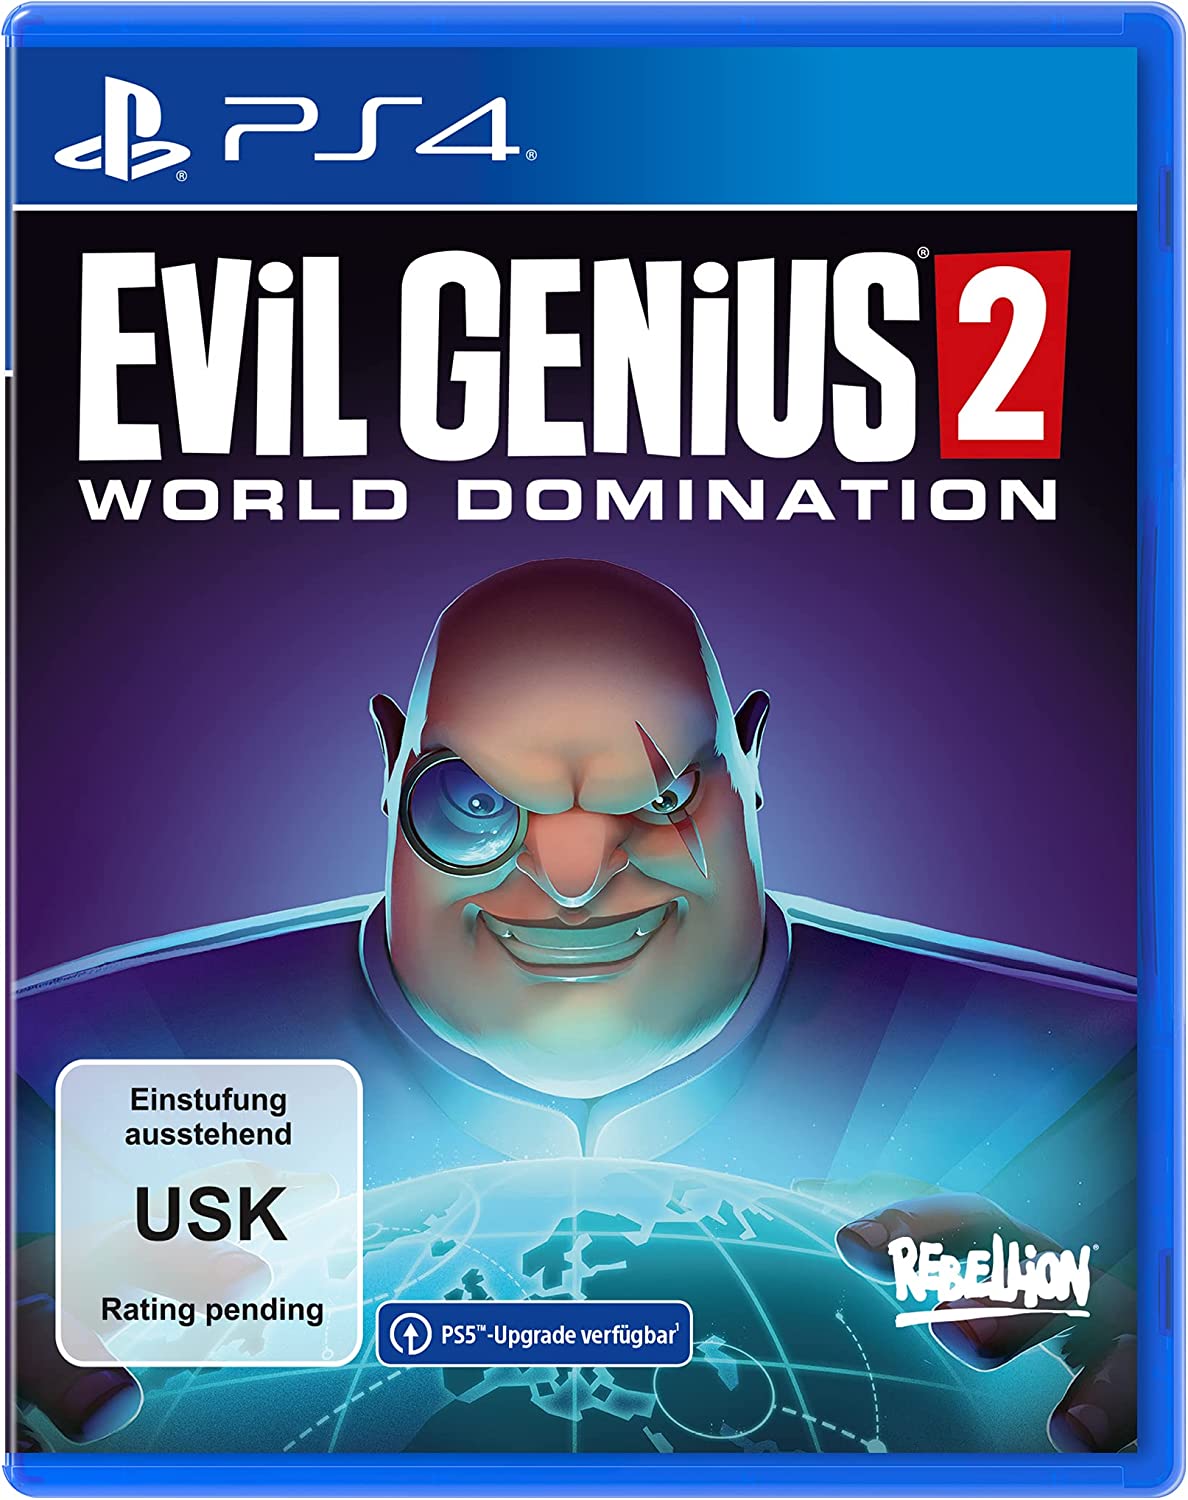 Evil Genius 2 World Domination PS5